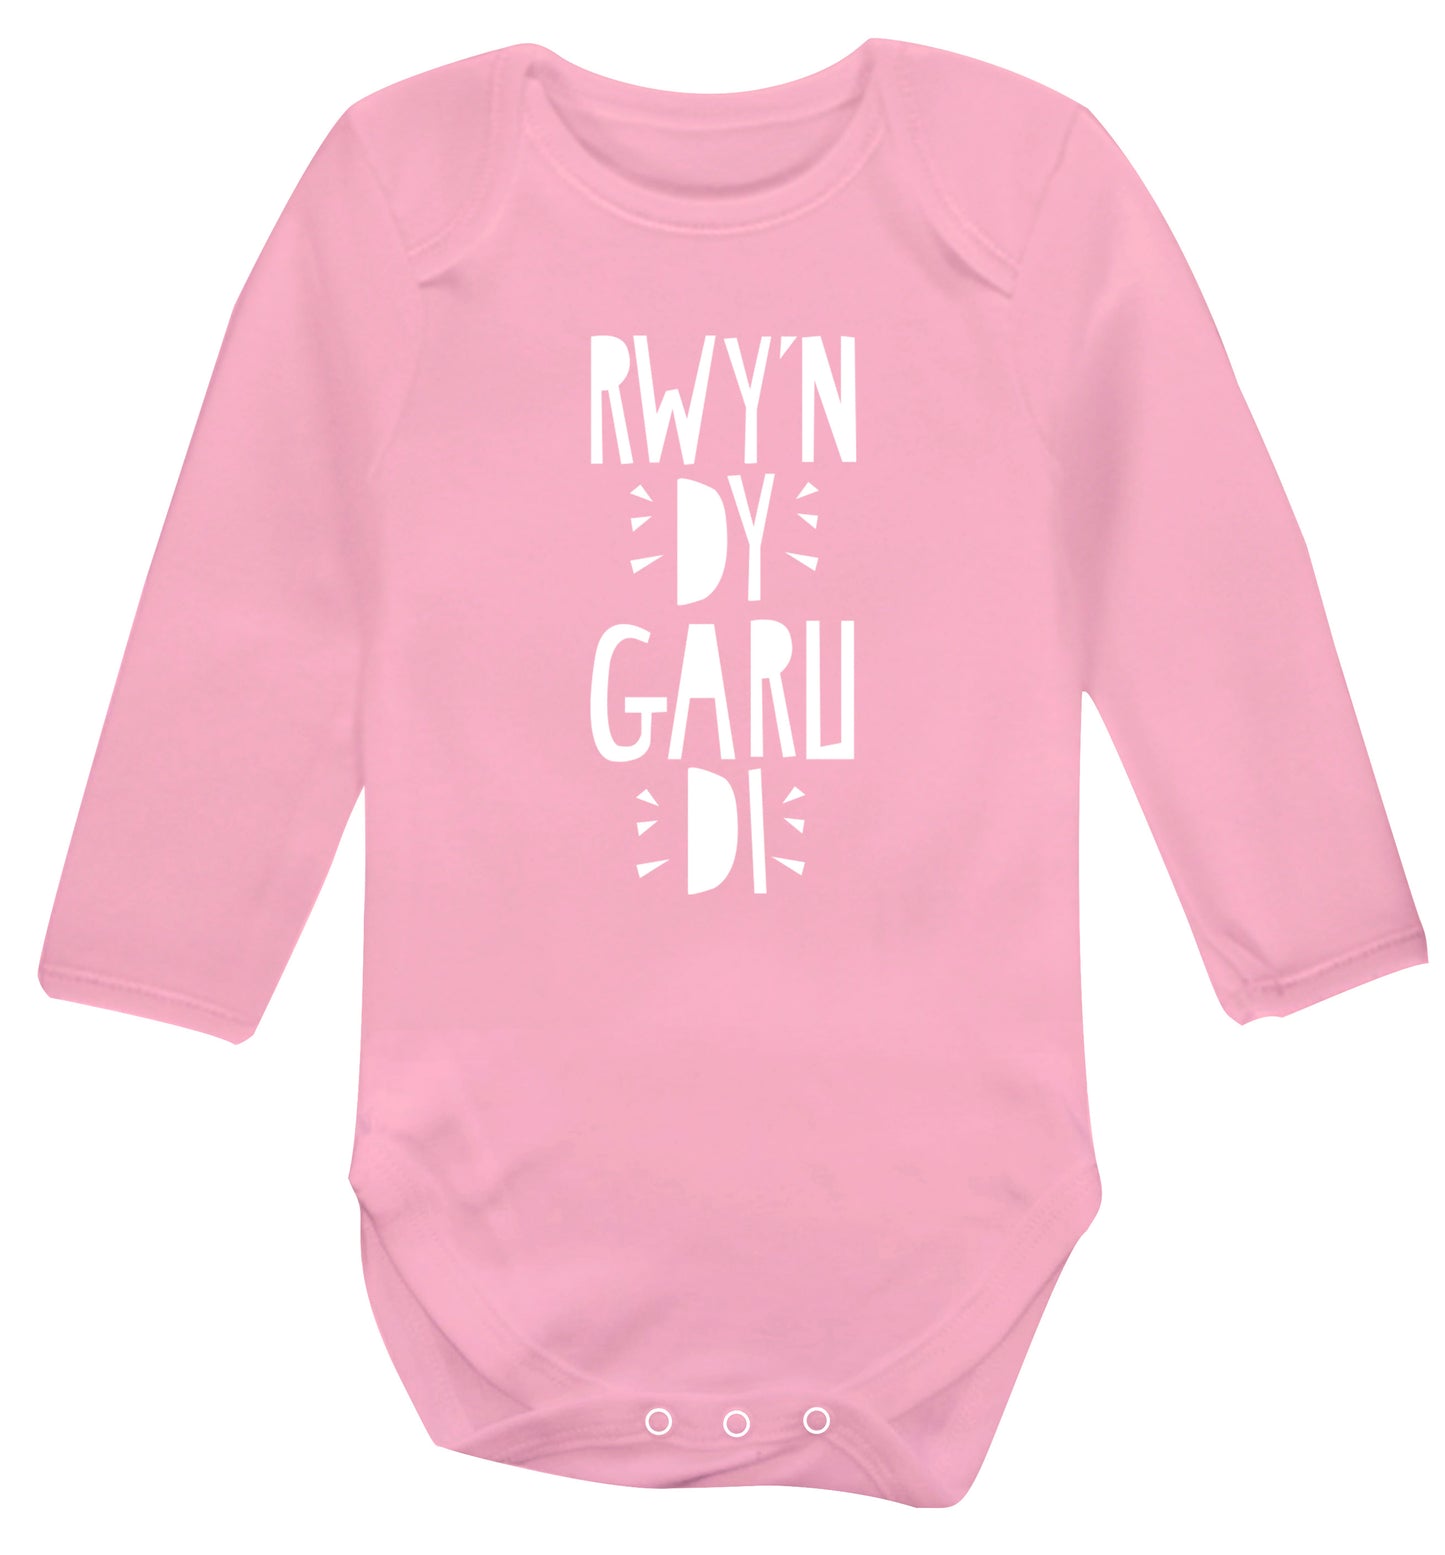 Rwy'n dy garu di - I love you Baby Vest long sleeved pale pink 6-12 months